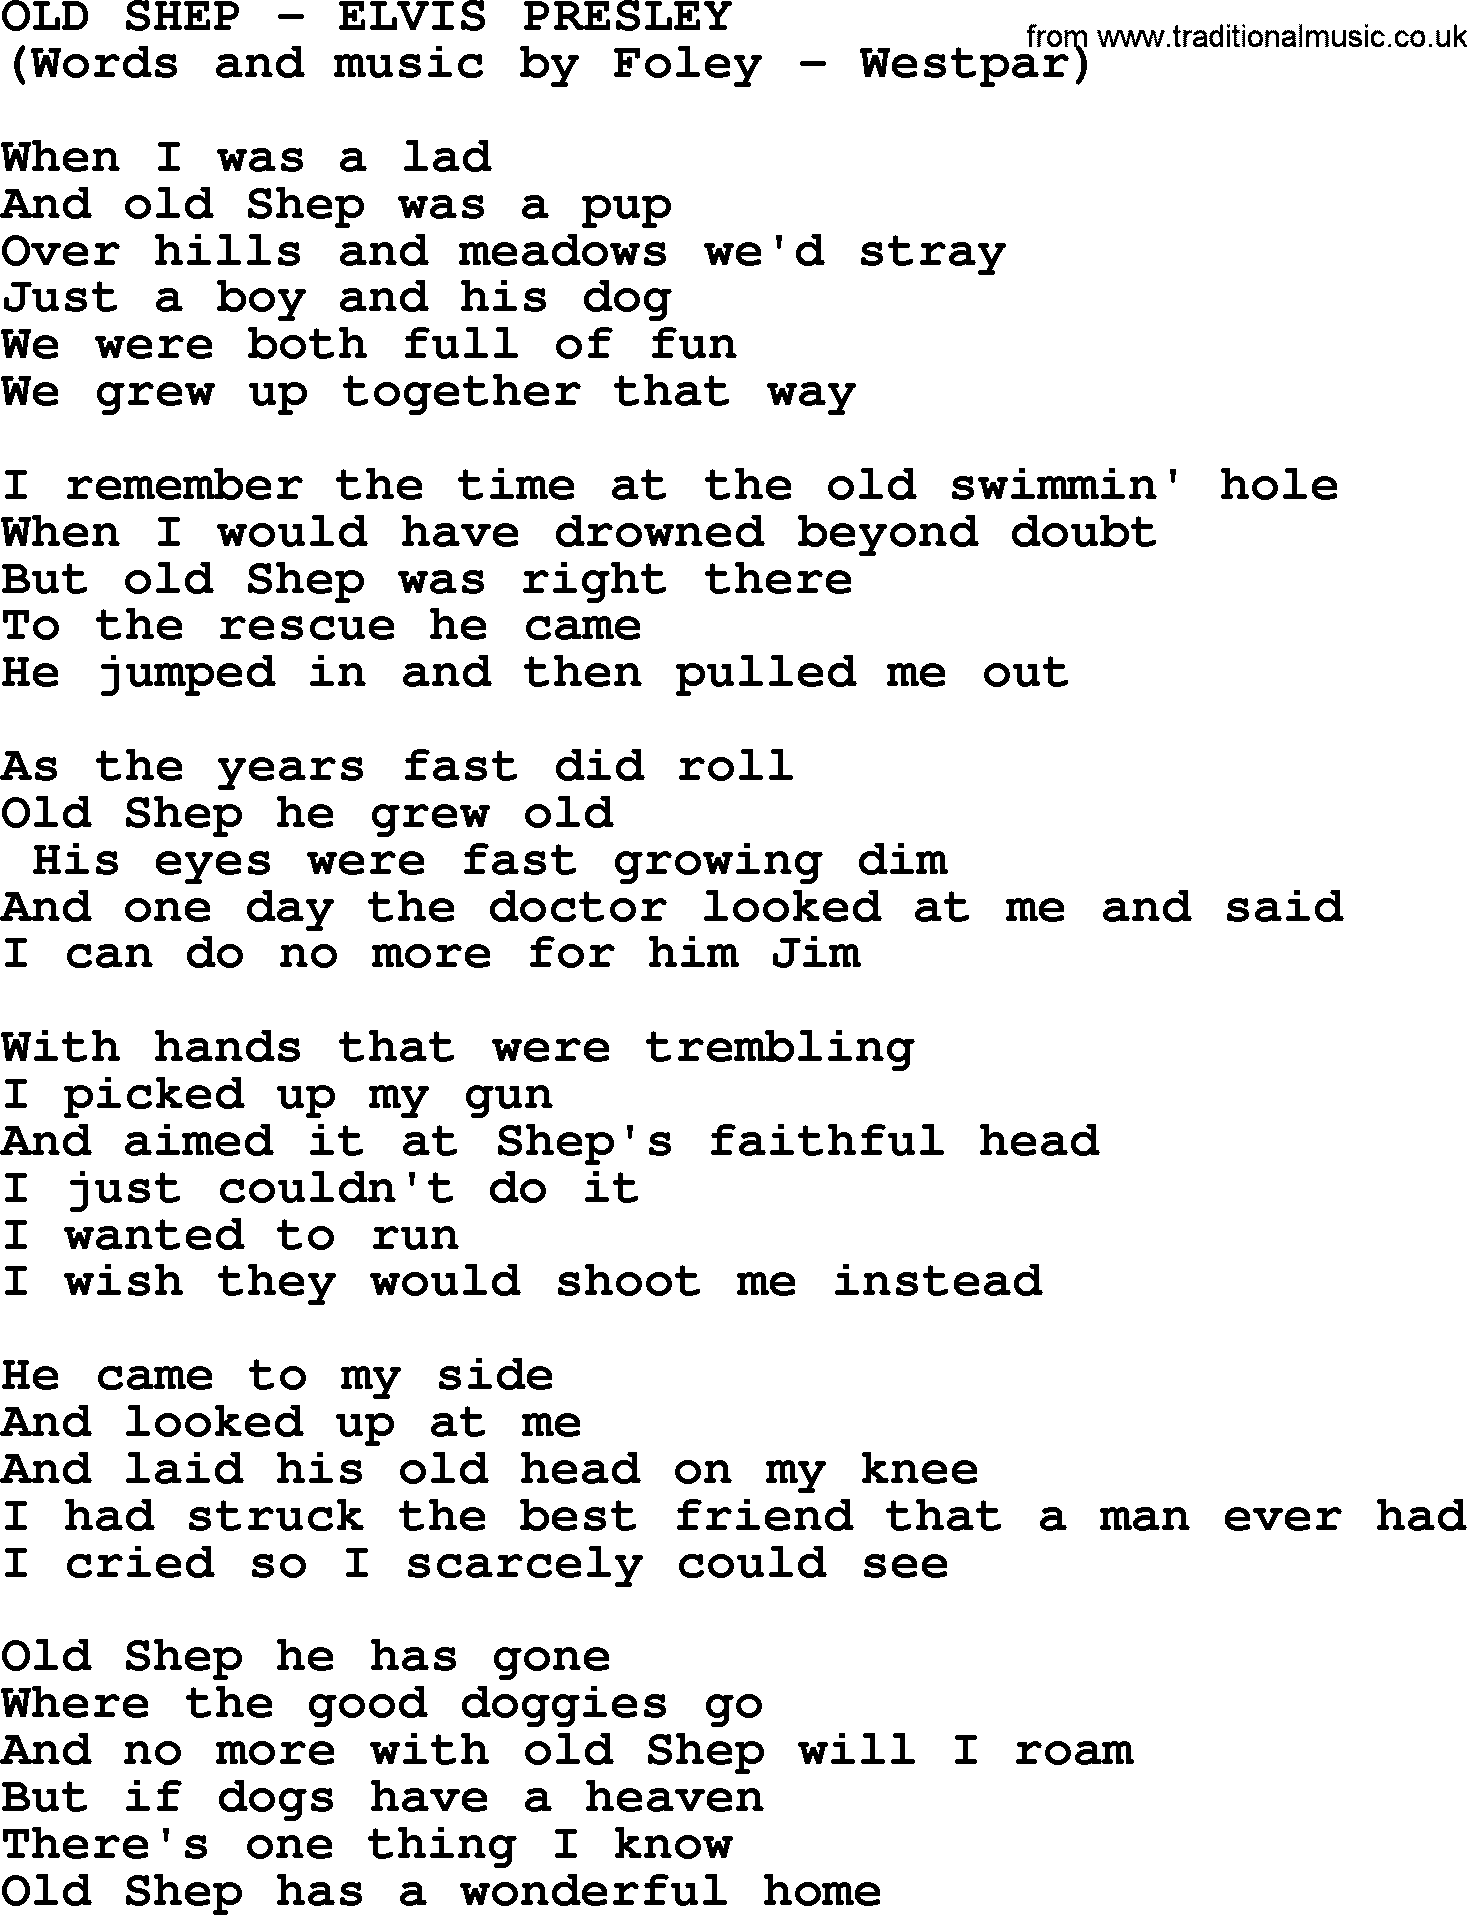 Elvis Presley song: Old Shep lyrics